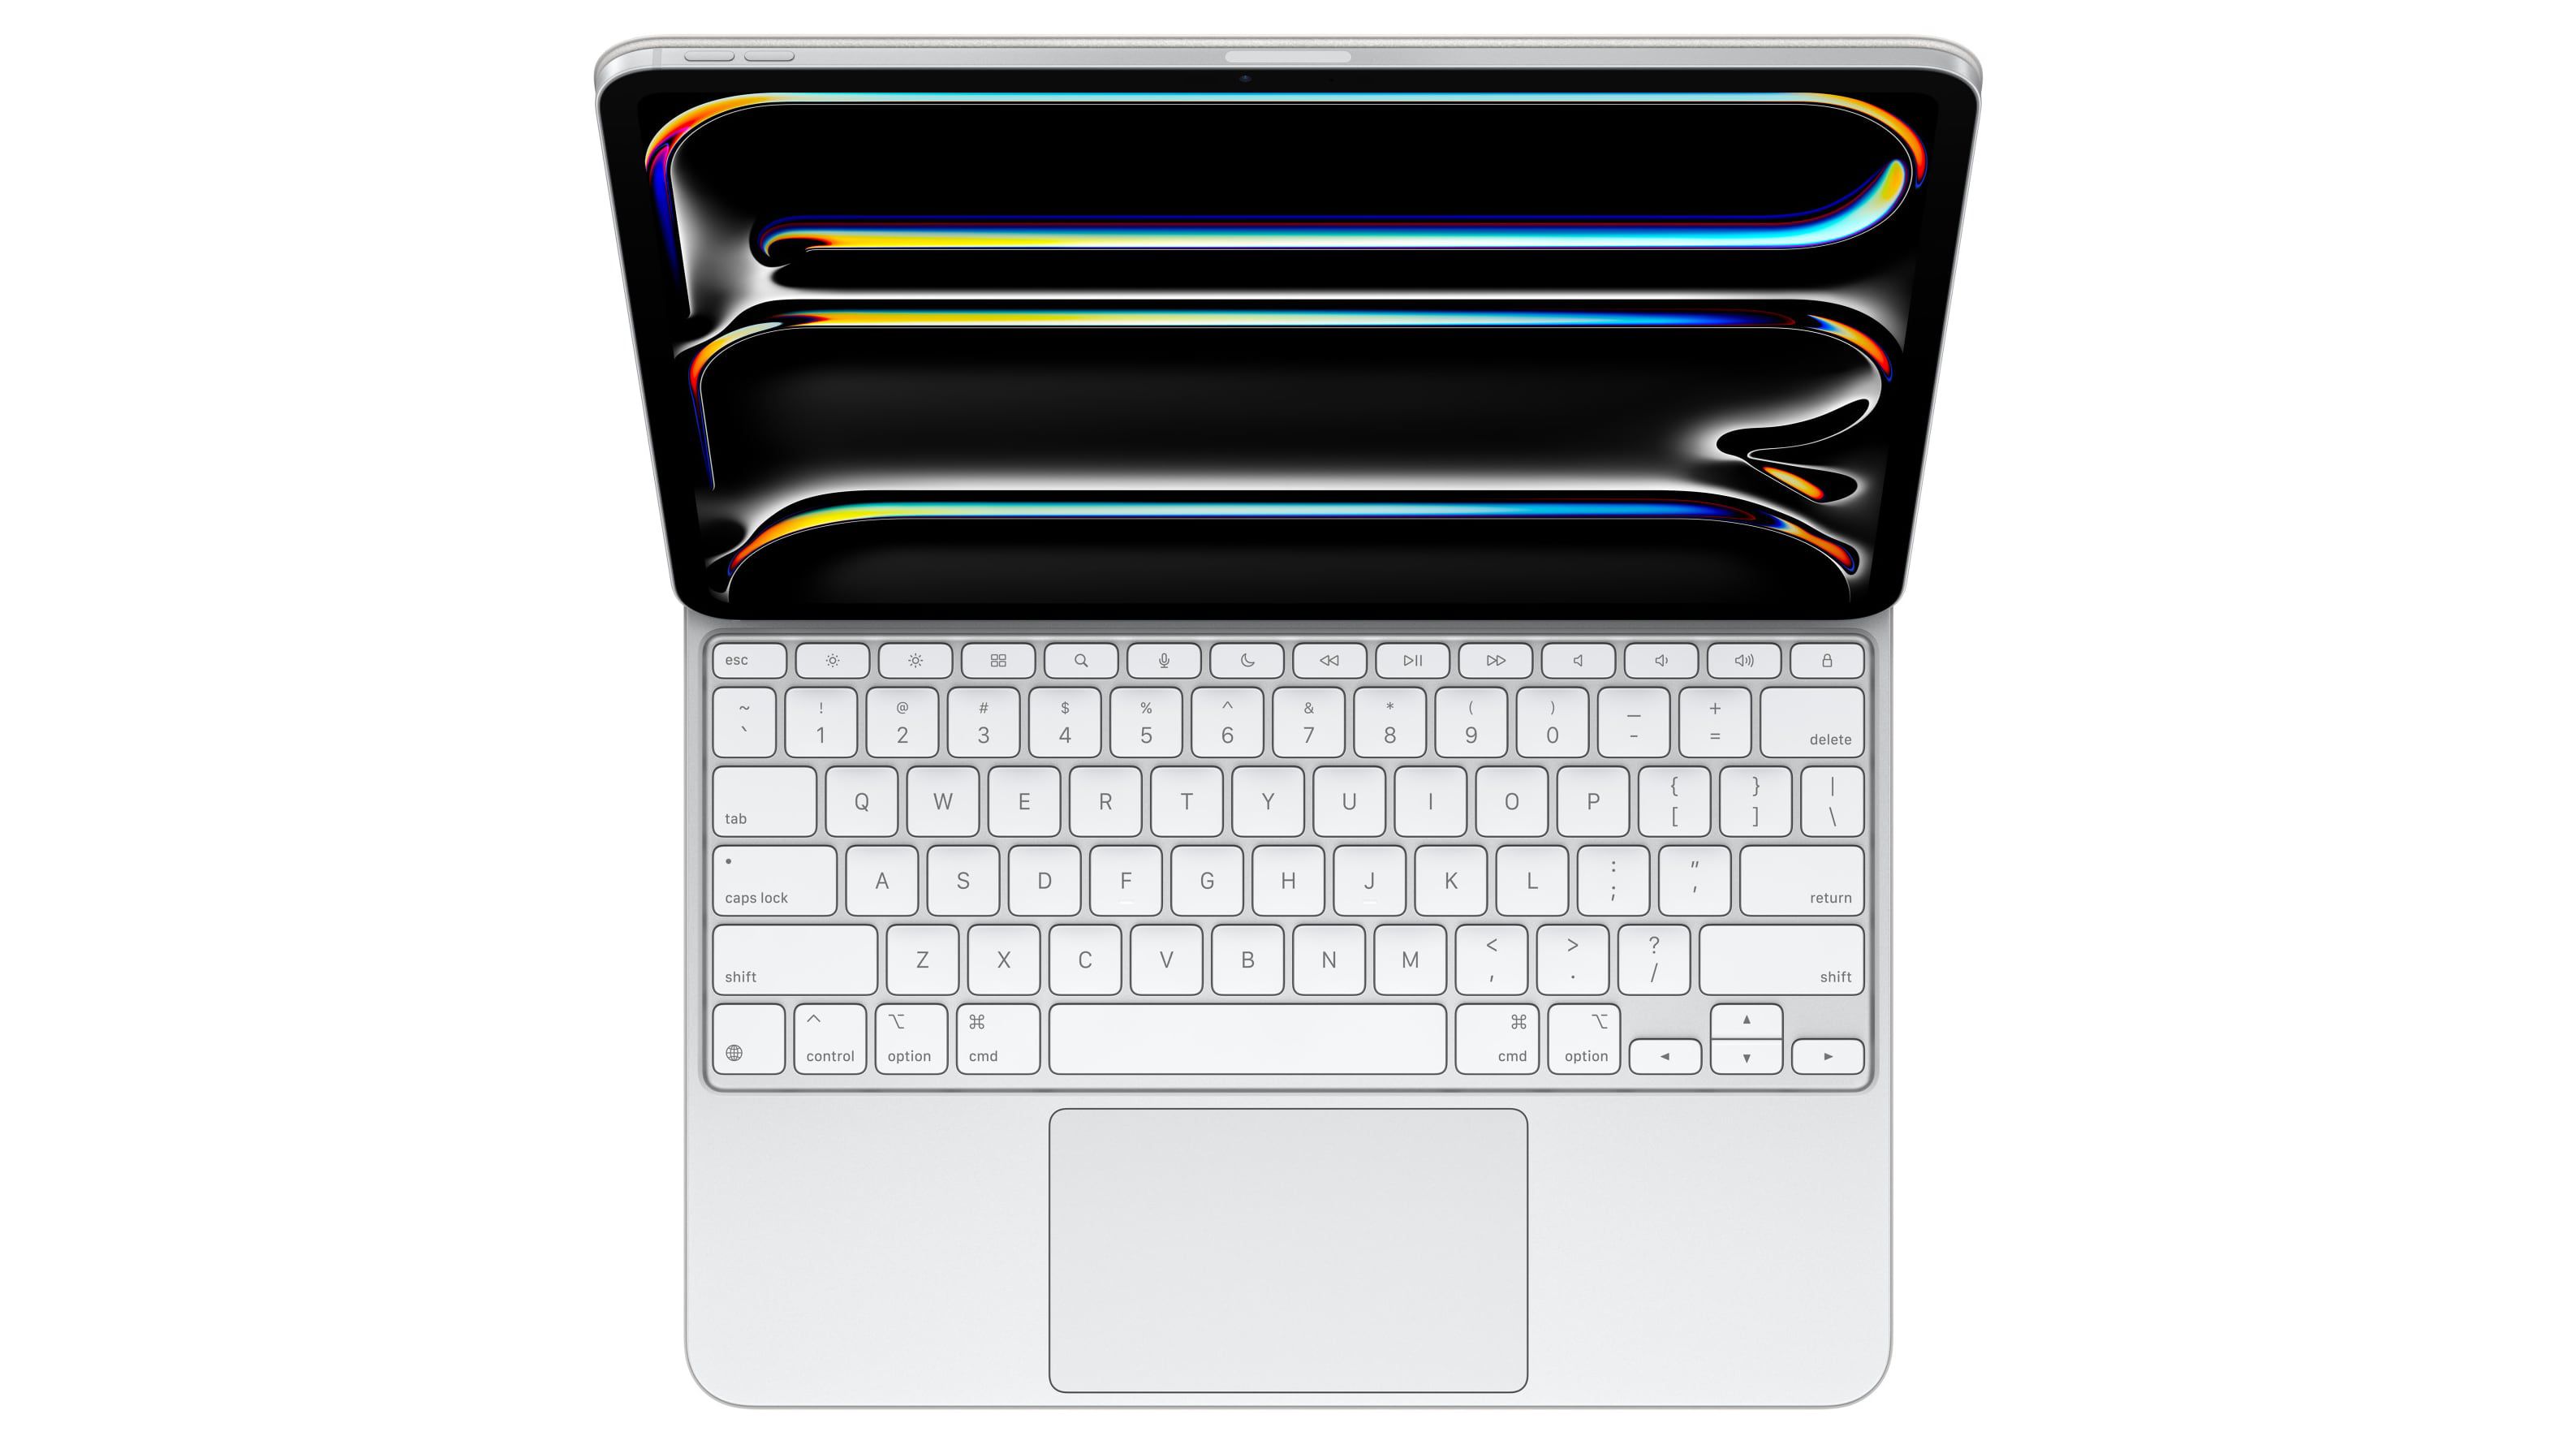 Клавиатура Magic Keyboard для iPad Pro 13 дюймов примерно на 50 грамм легче старой модели